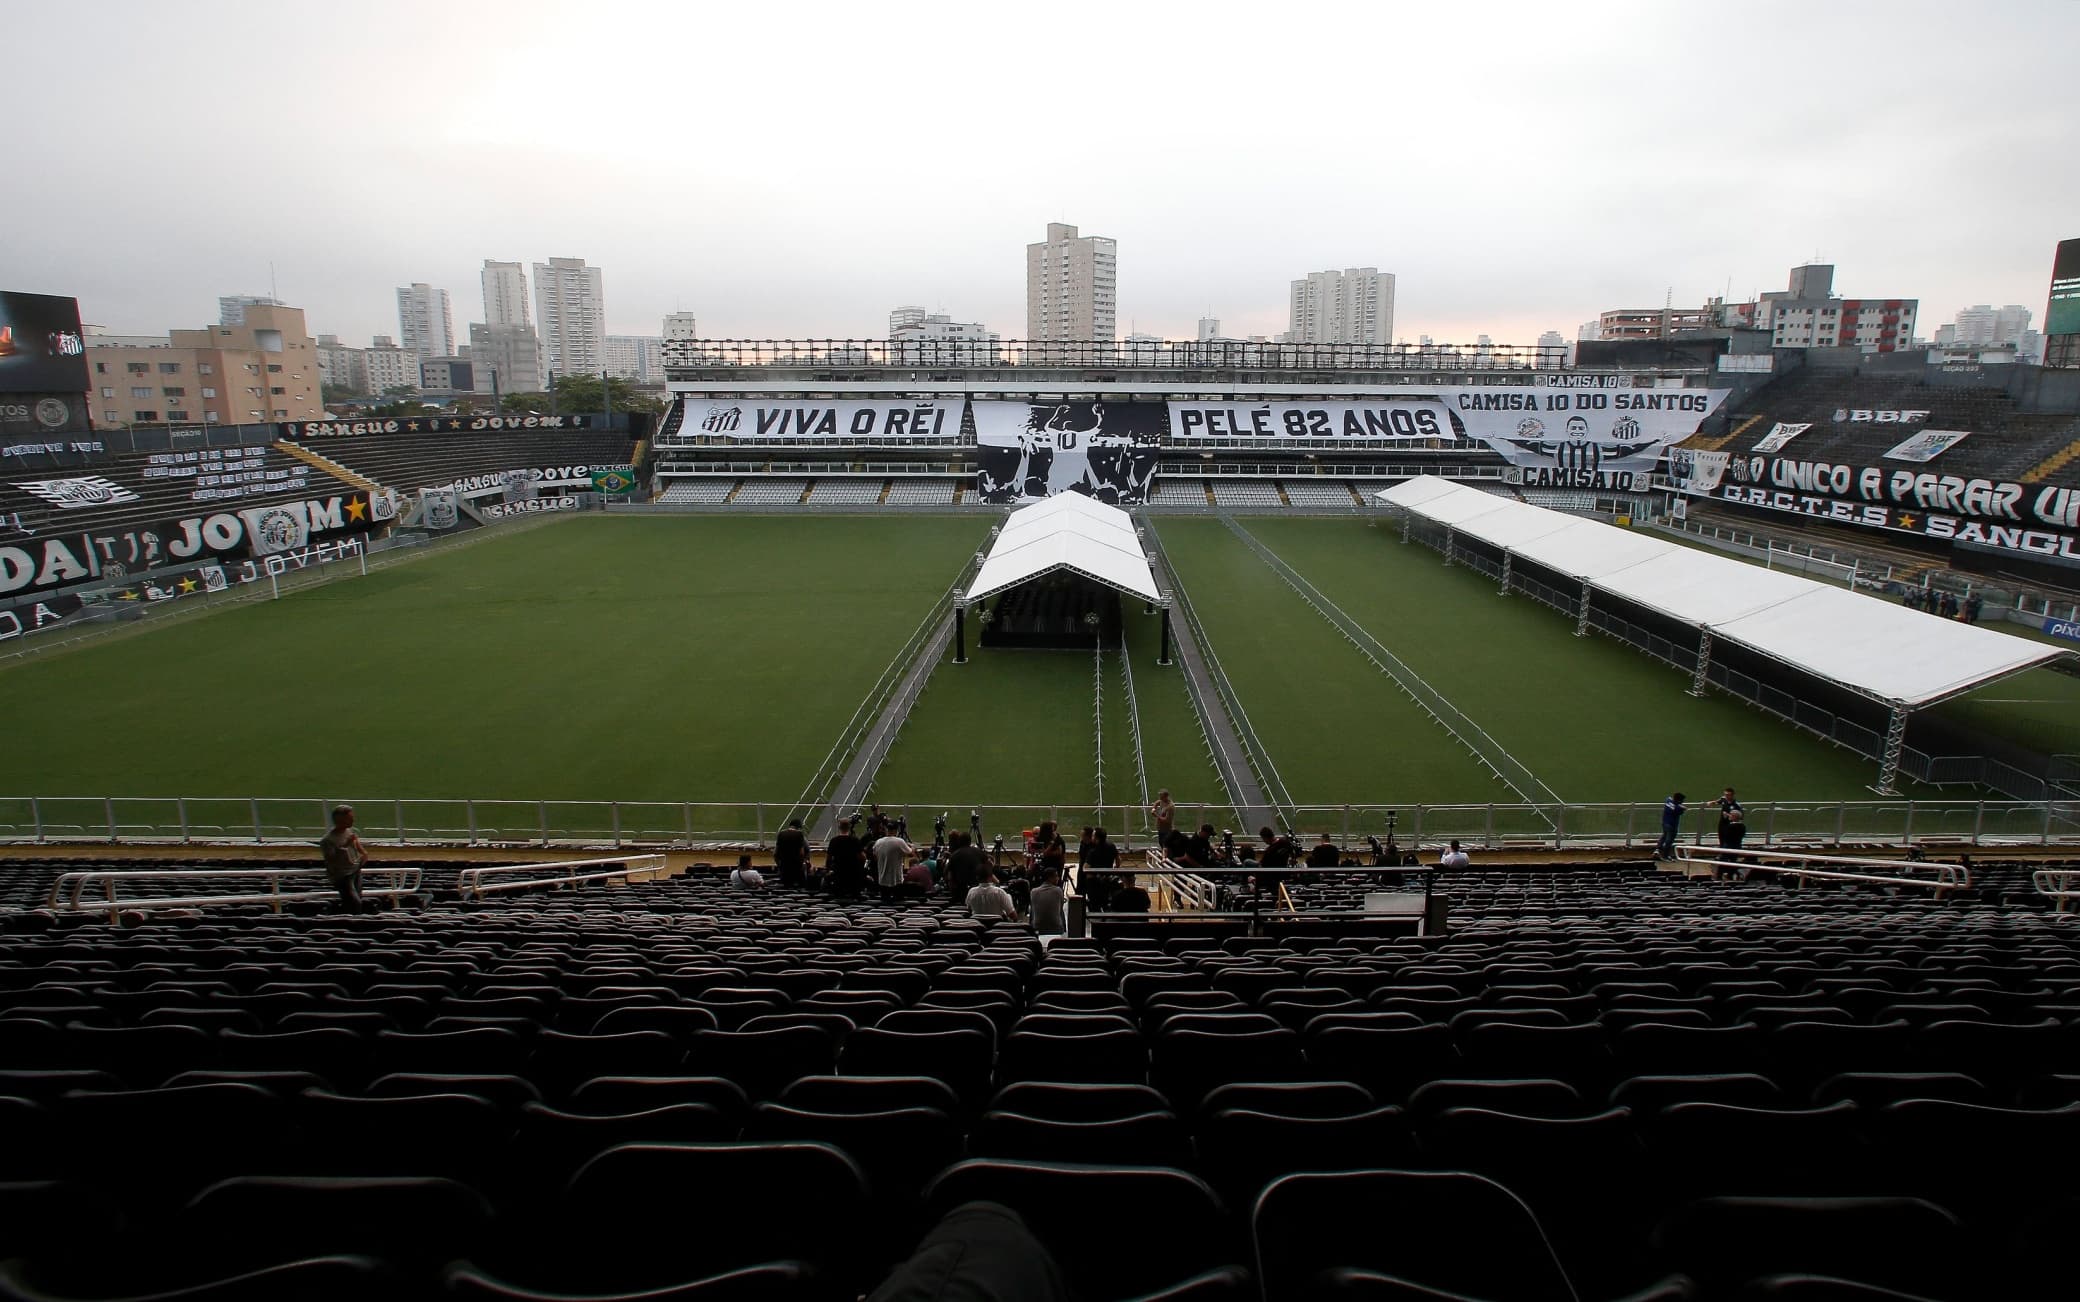 Lo stadio del Santos preparato per la veglia funebre per Pelé